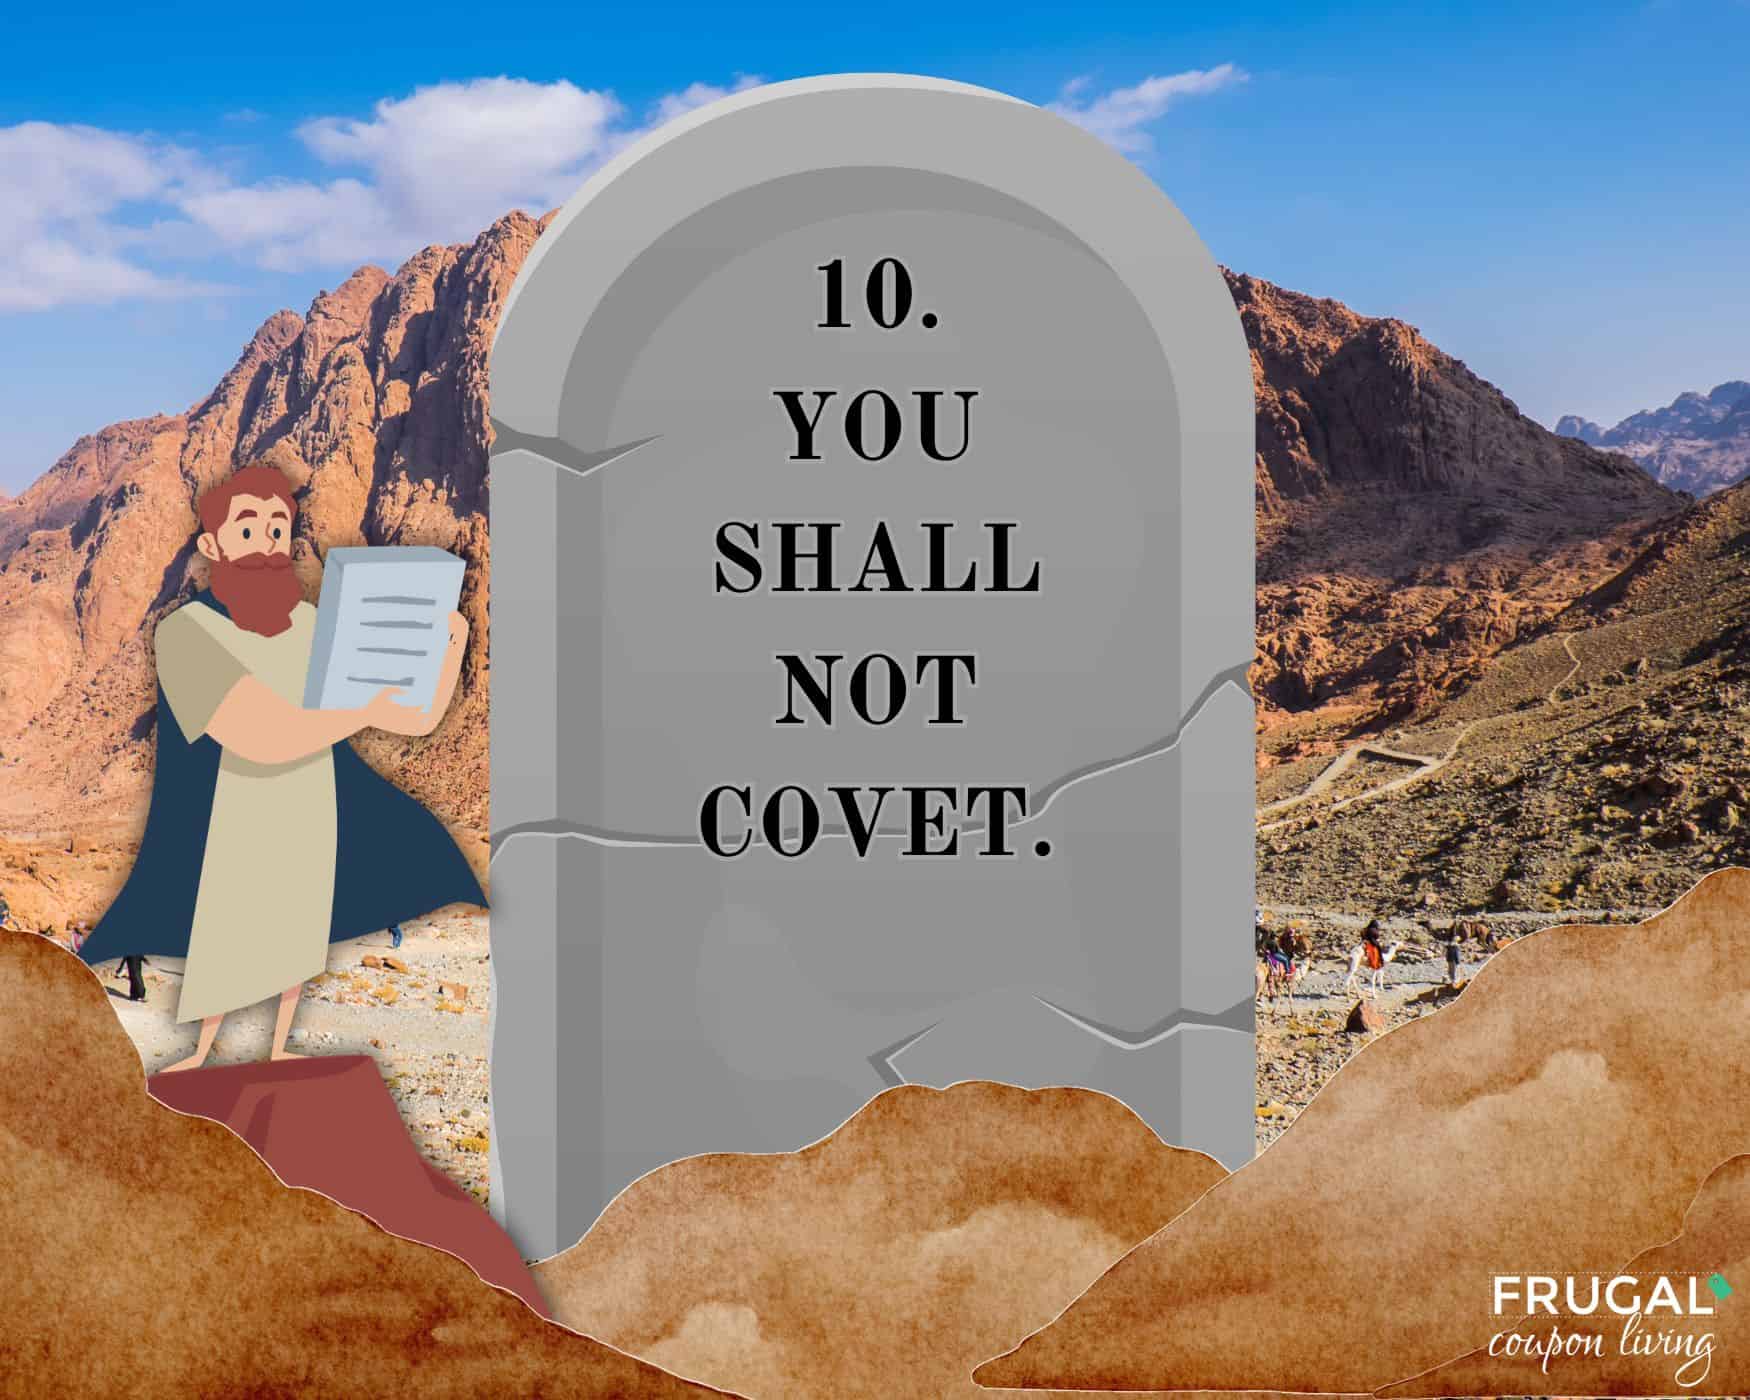 You shall not covet tenth commandment tablet